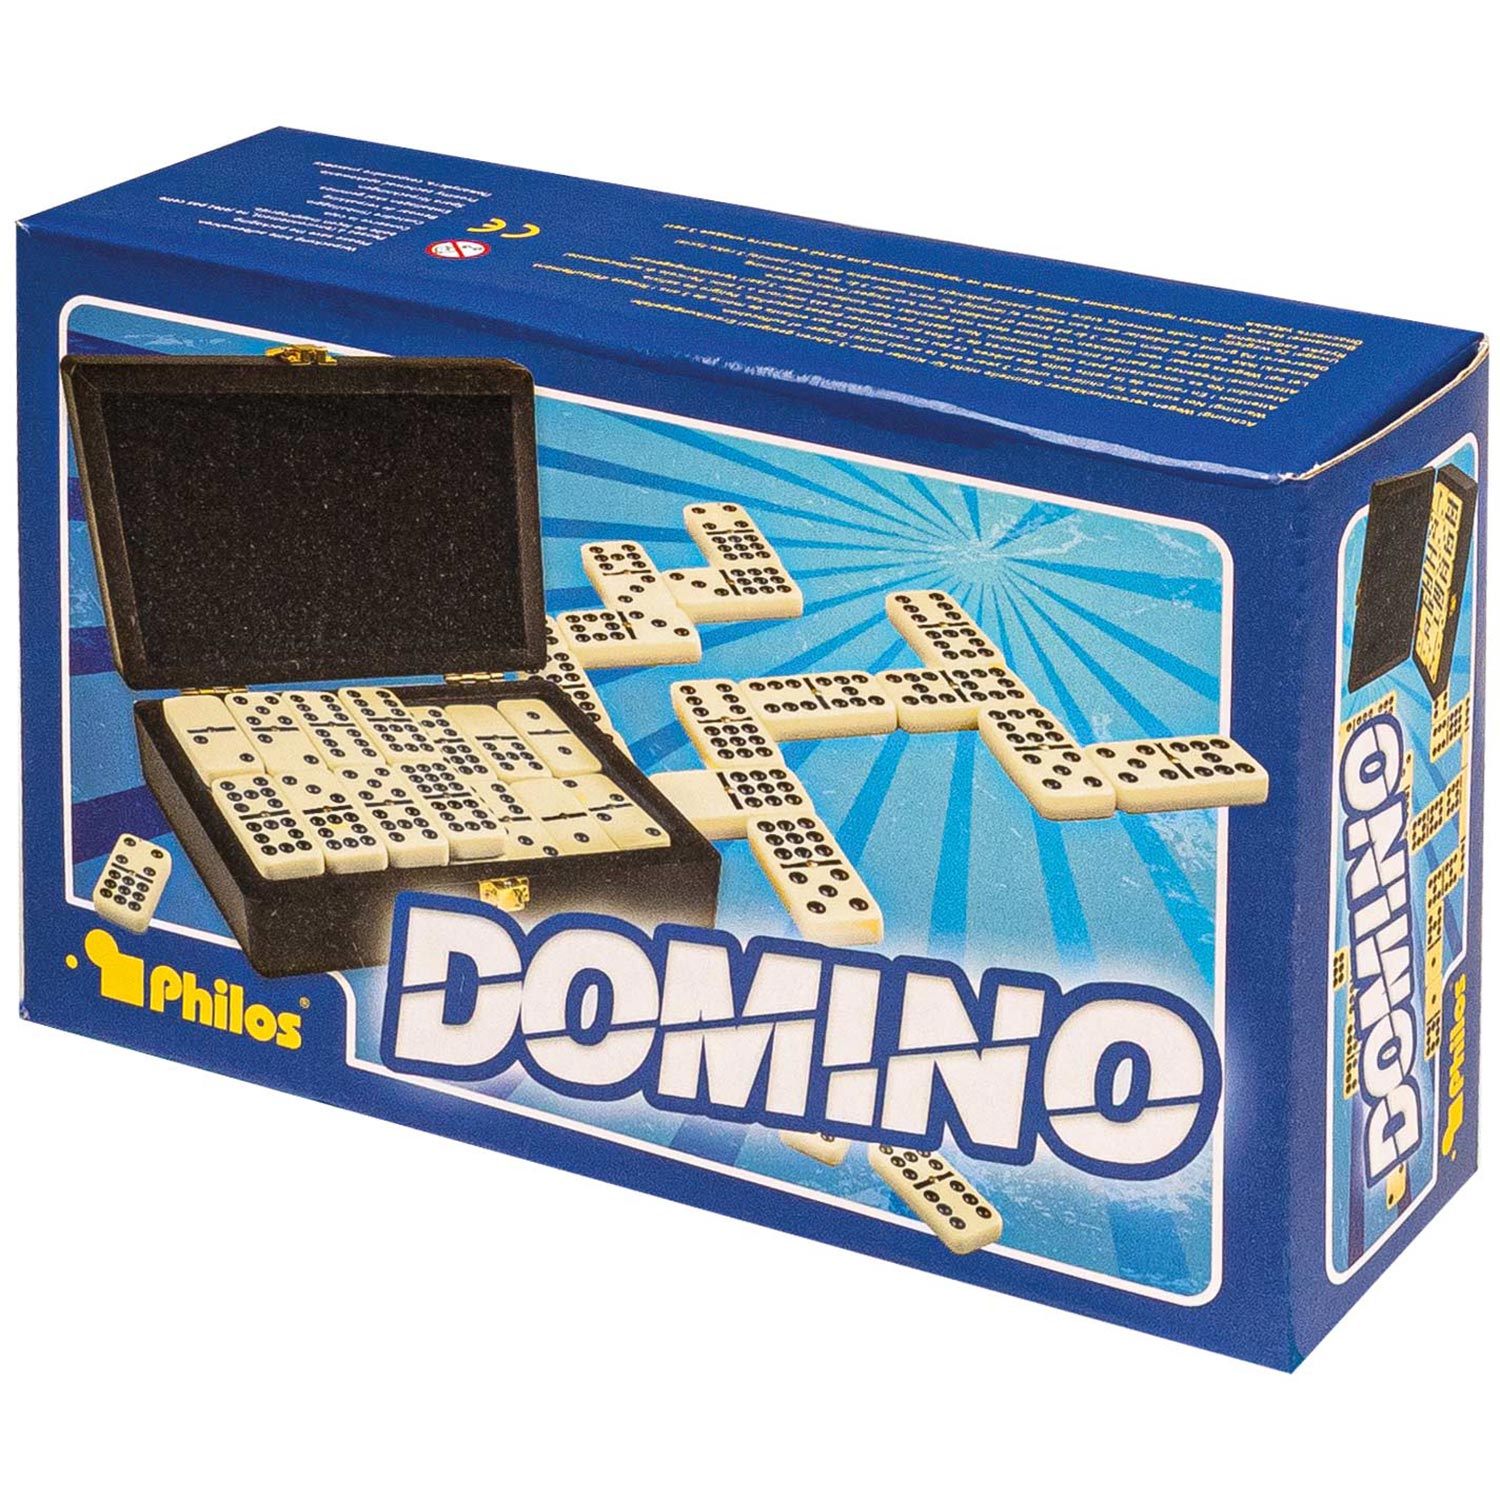 Philos Domino double 9 walnut box 20x12,5cm